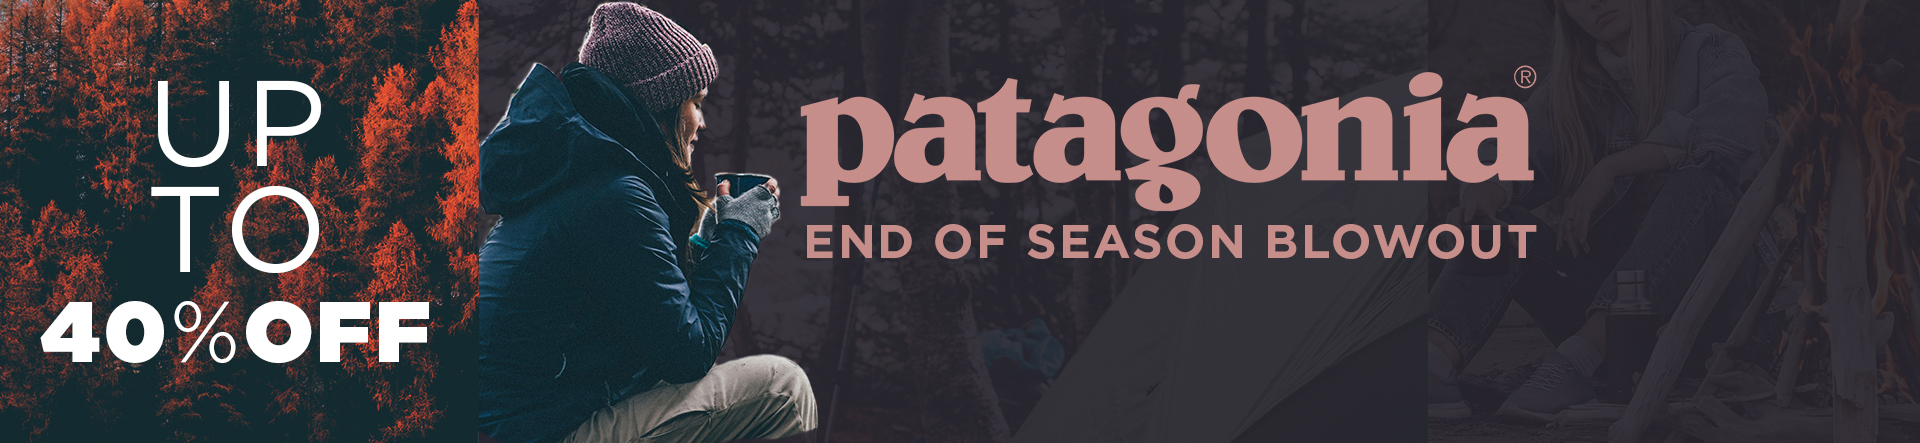 Patagonia End of Season Blowout